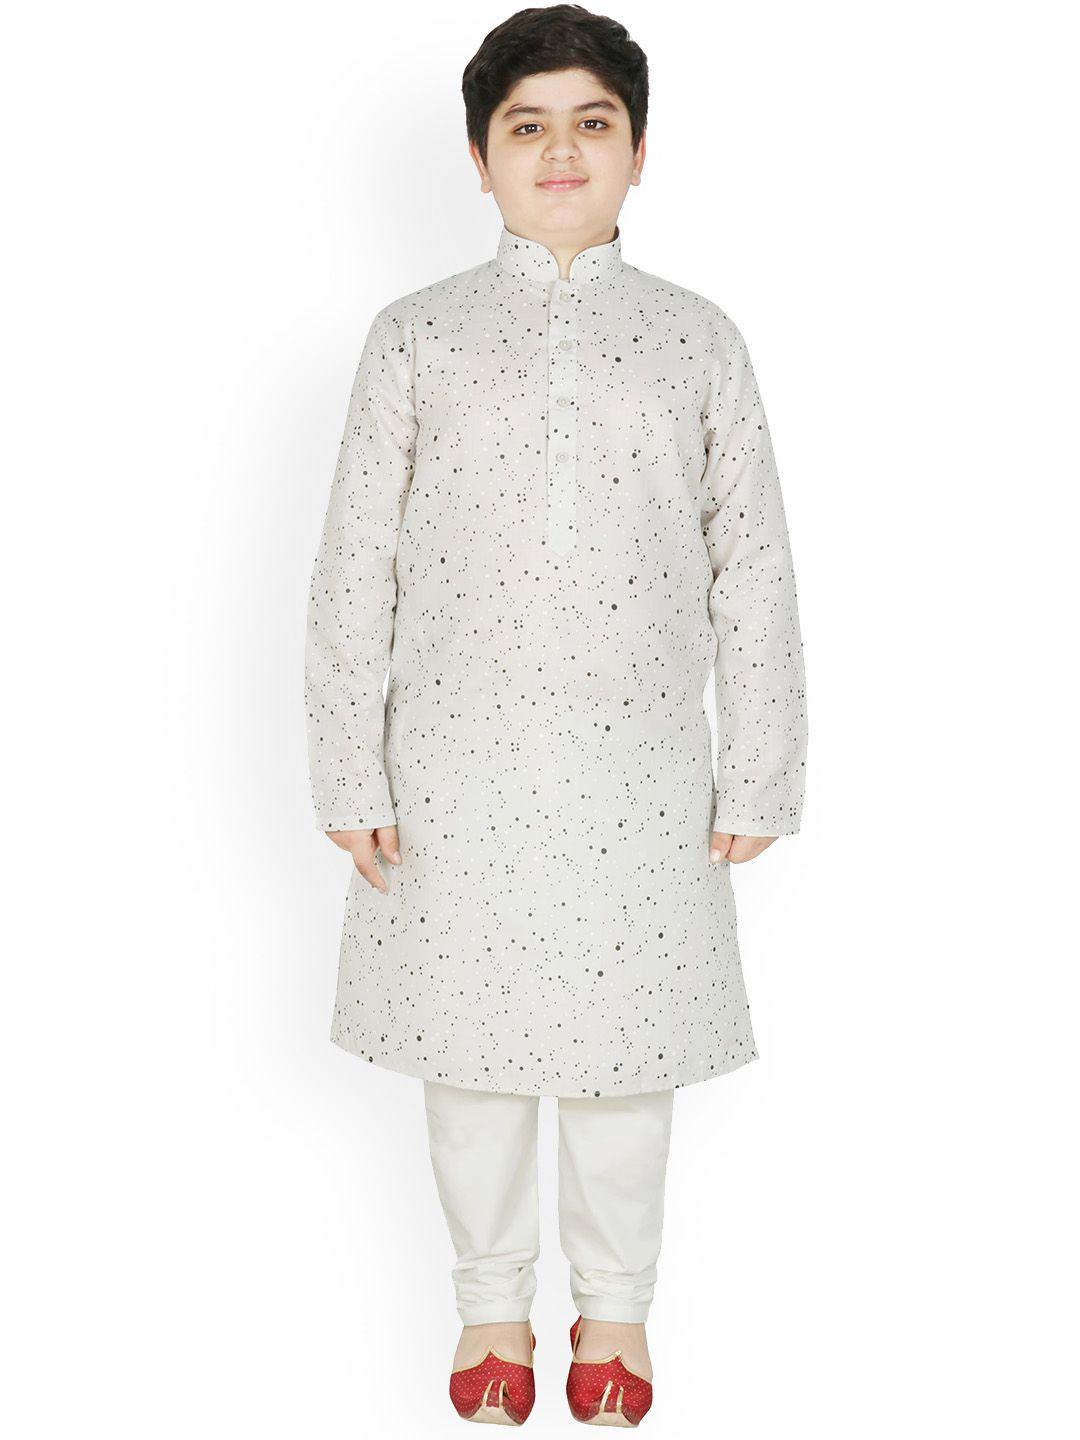 sg-yuvraj-boys-polka-dots-printed-pure-cotton-kurta-with-pyjamas